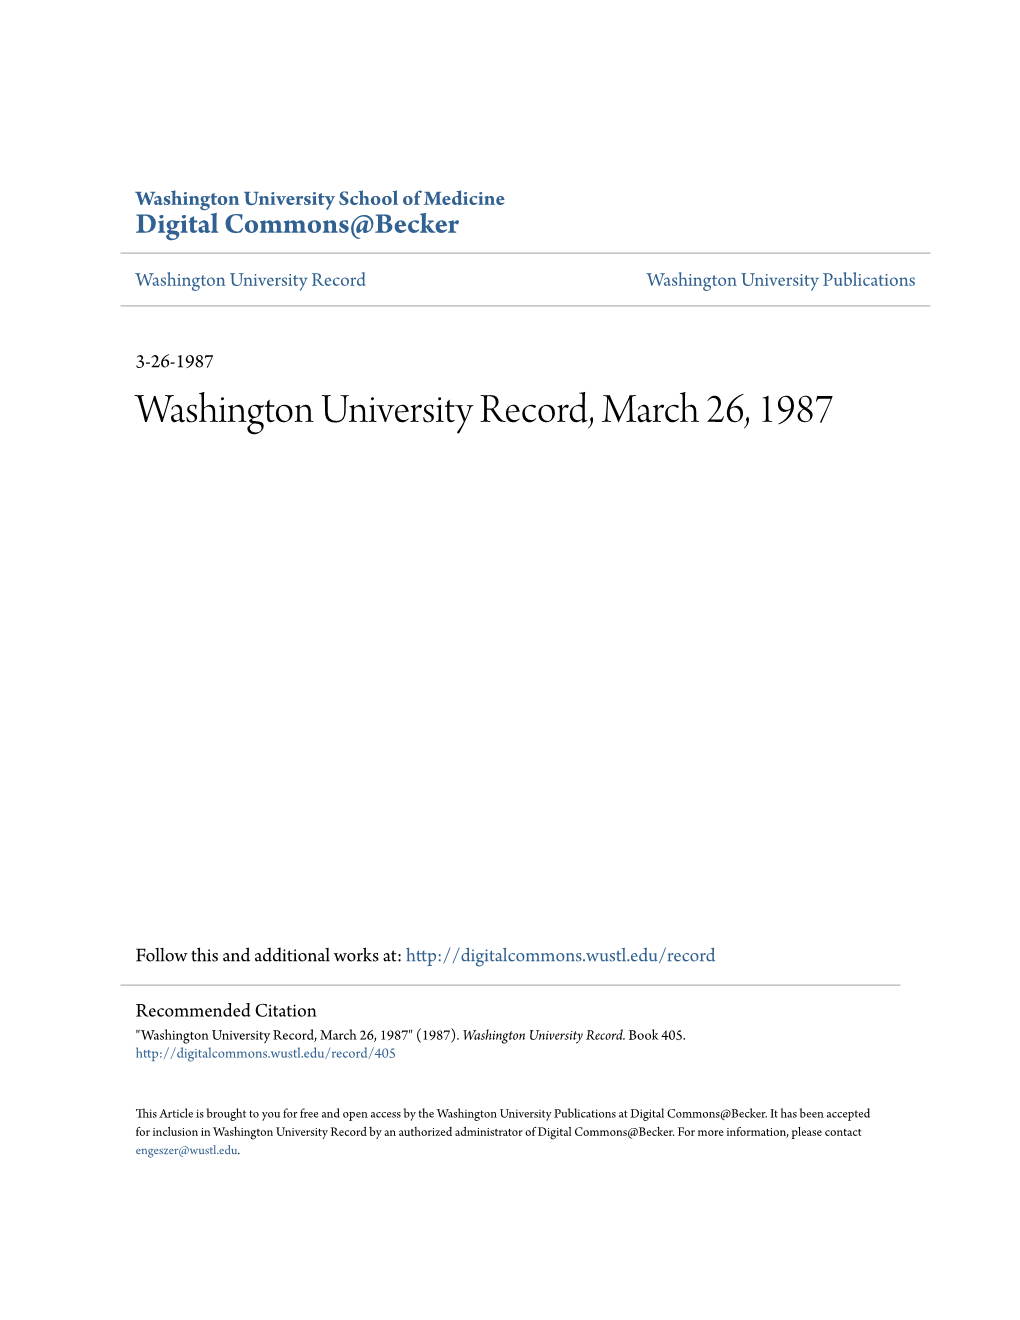 Washington University Record, March 26, 1987